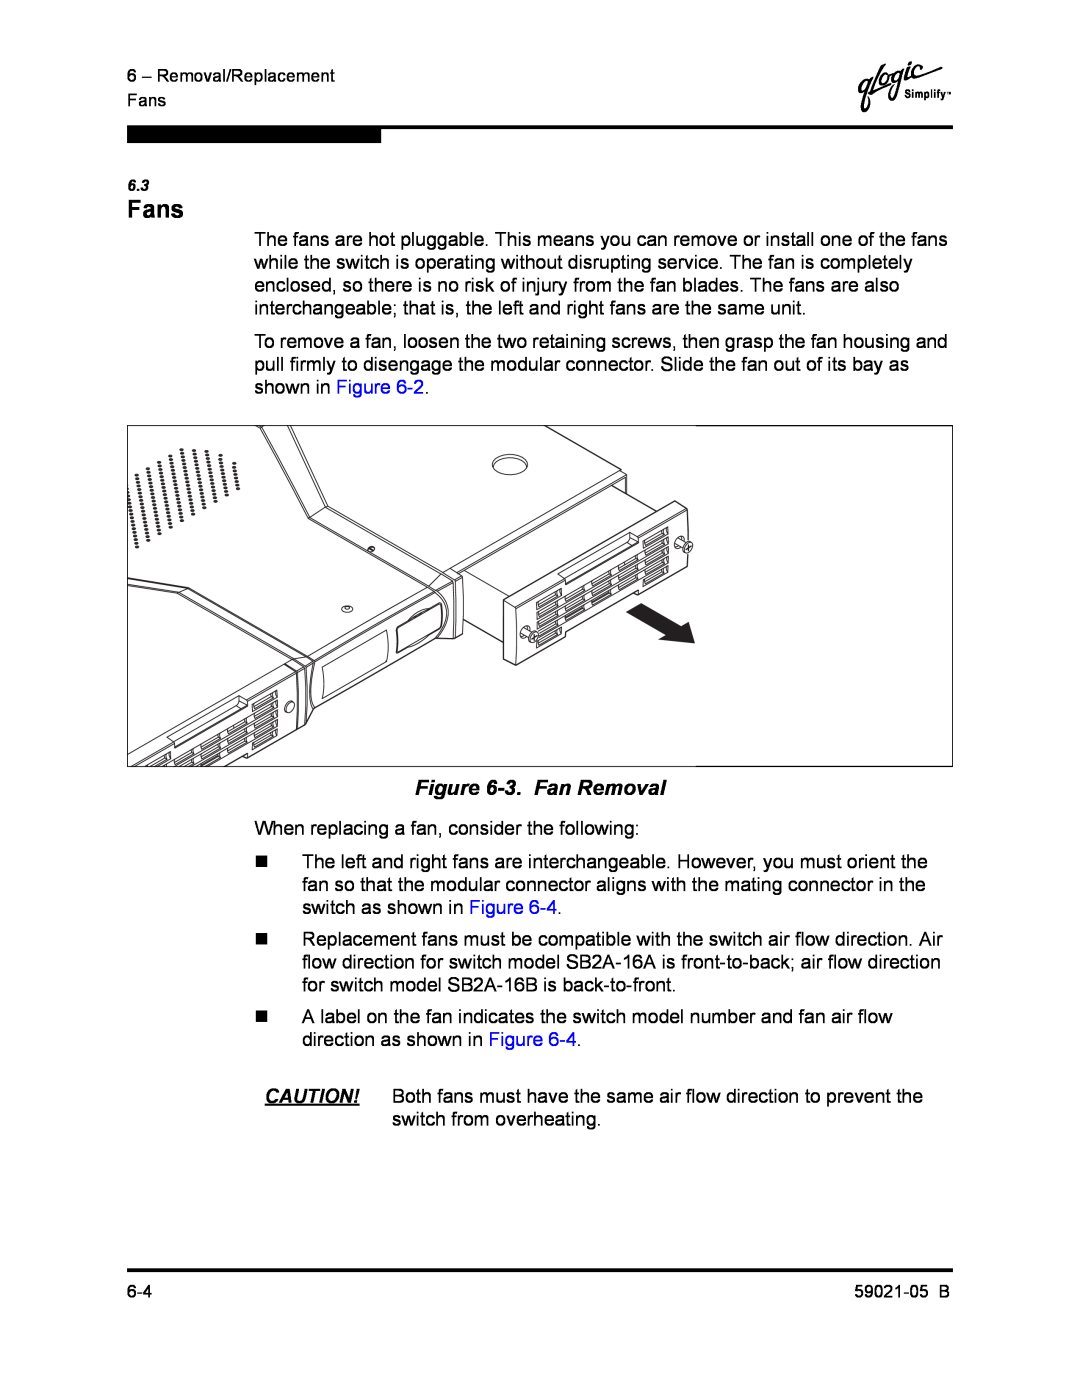 Q-Logic 59021-05 B manual 3. Fan Removal, Fans 